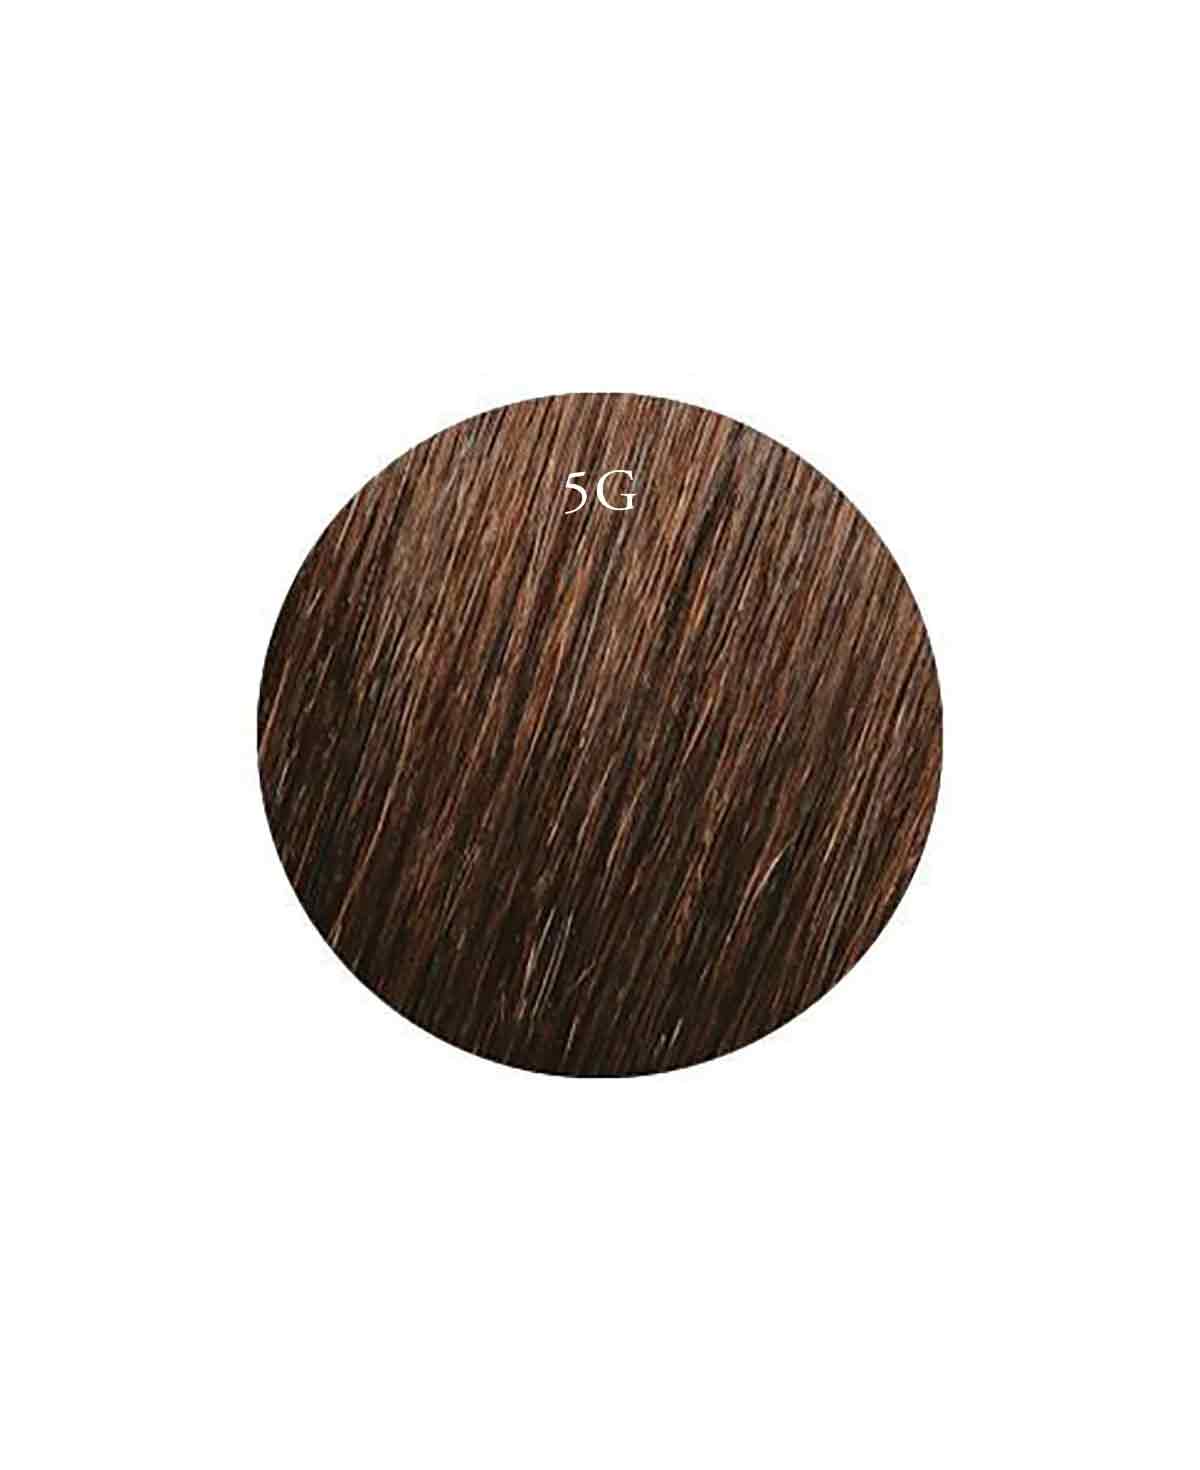 Showpony 45-50cm (20") 3 in 1 HALO Hair Exstension - 5G Brown